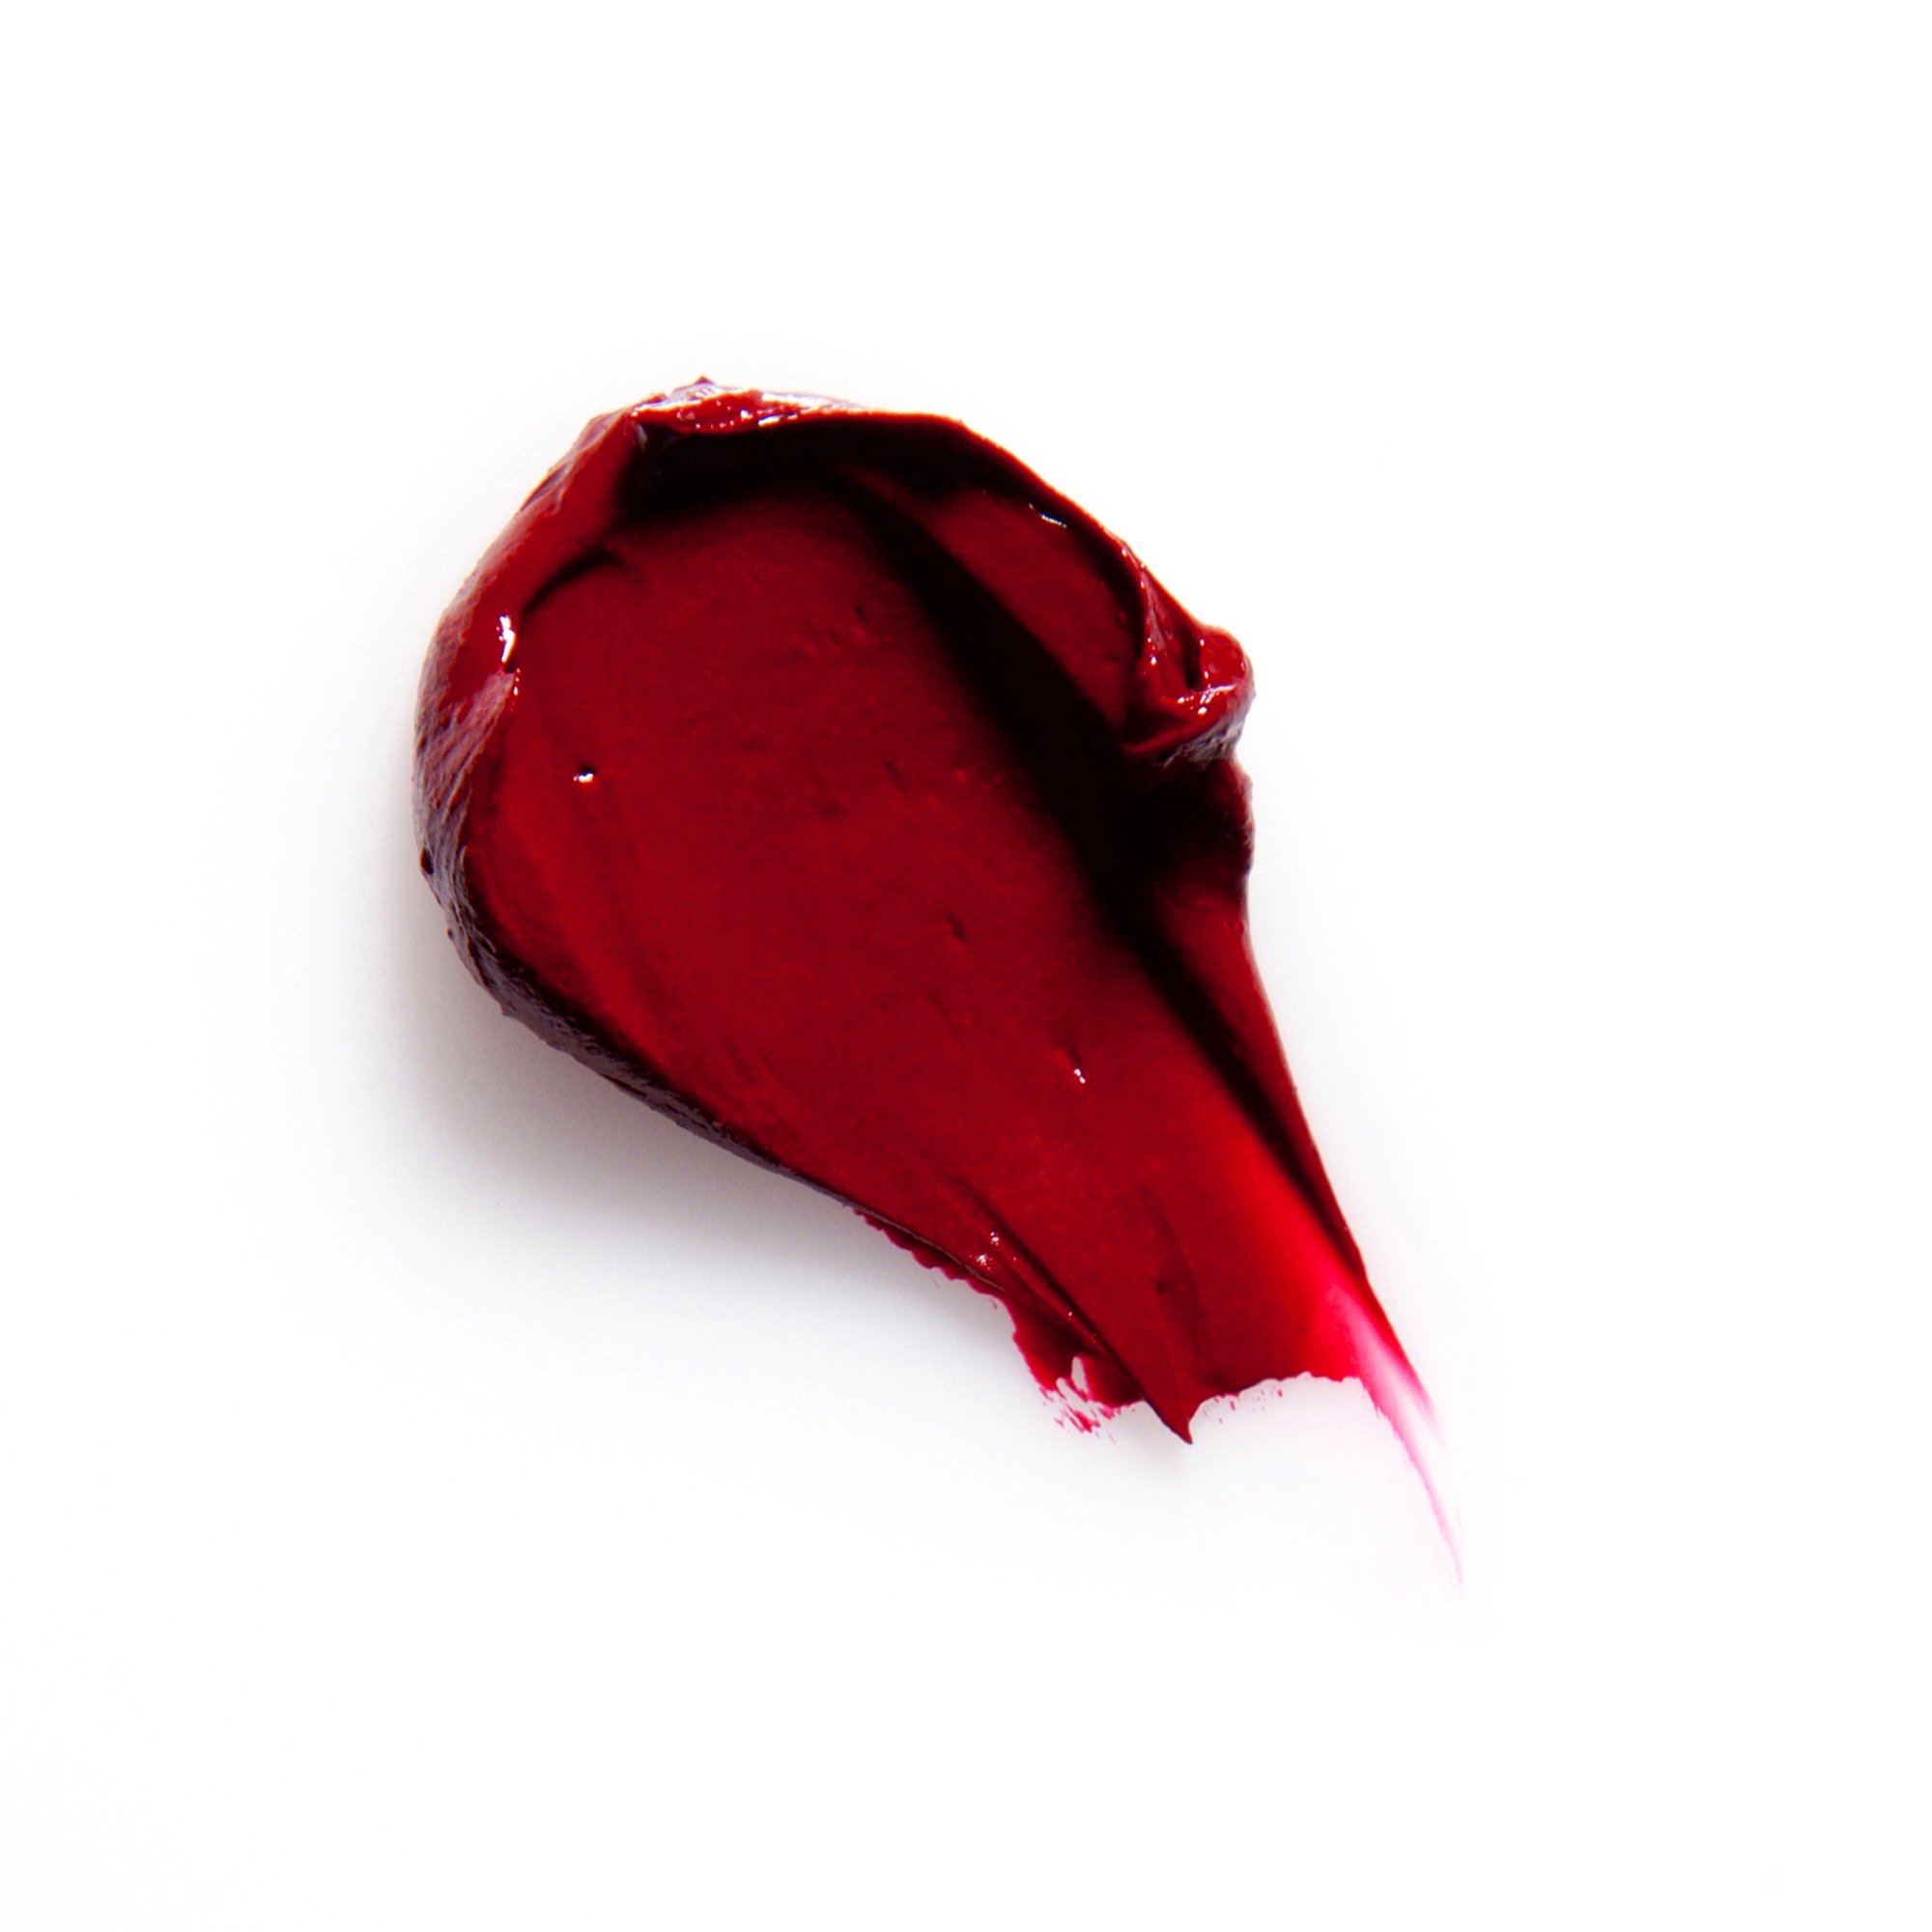 Load image into Gallery viewer, Rituel de Fille Forbidden Lipstick
